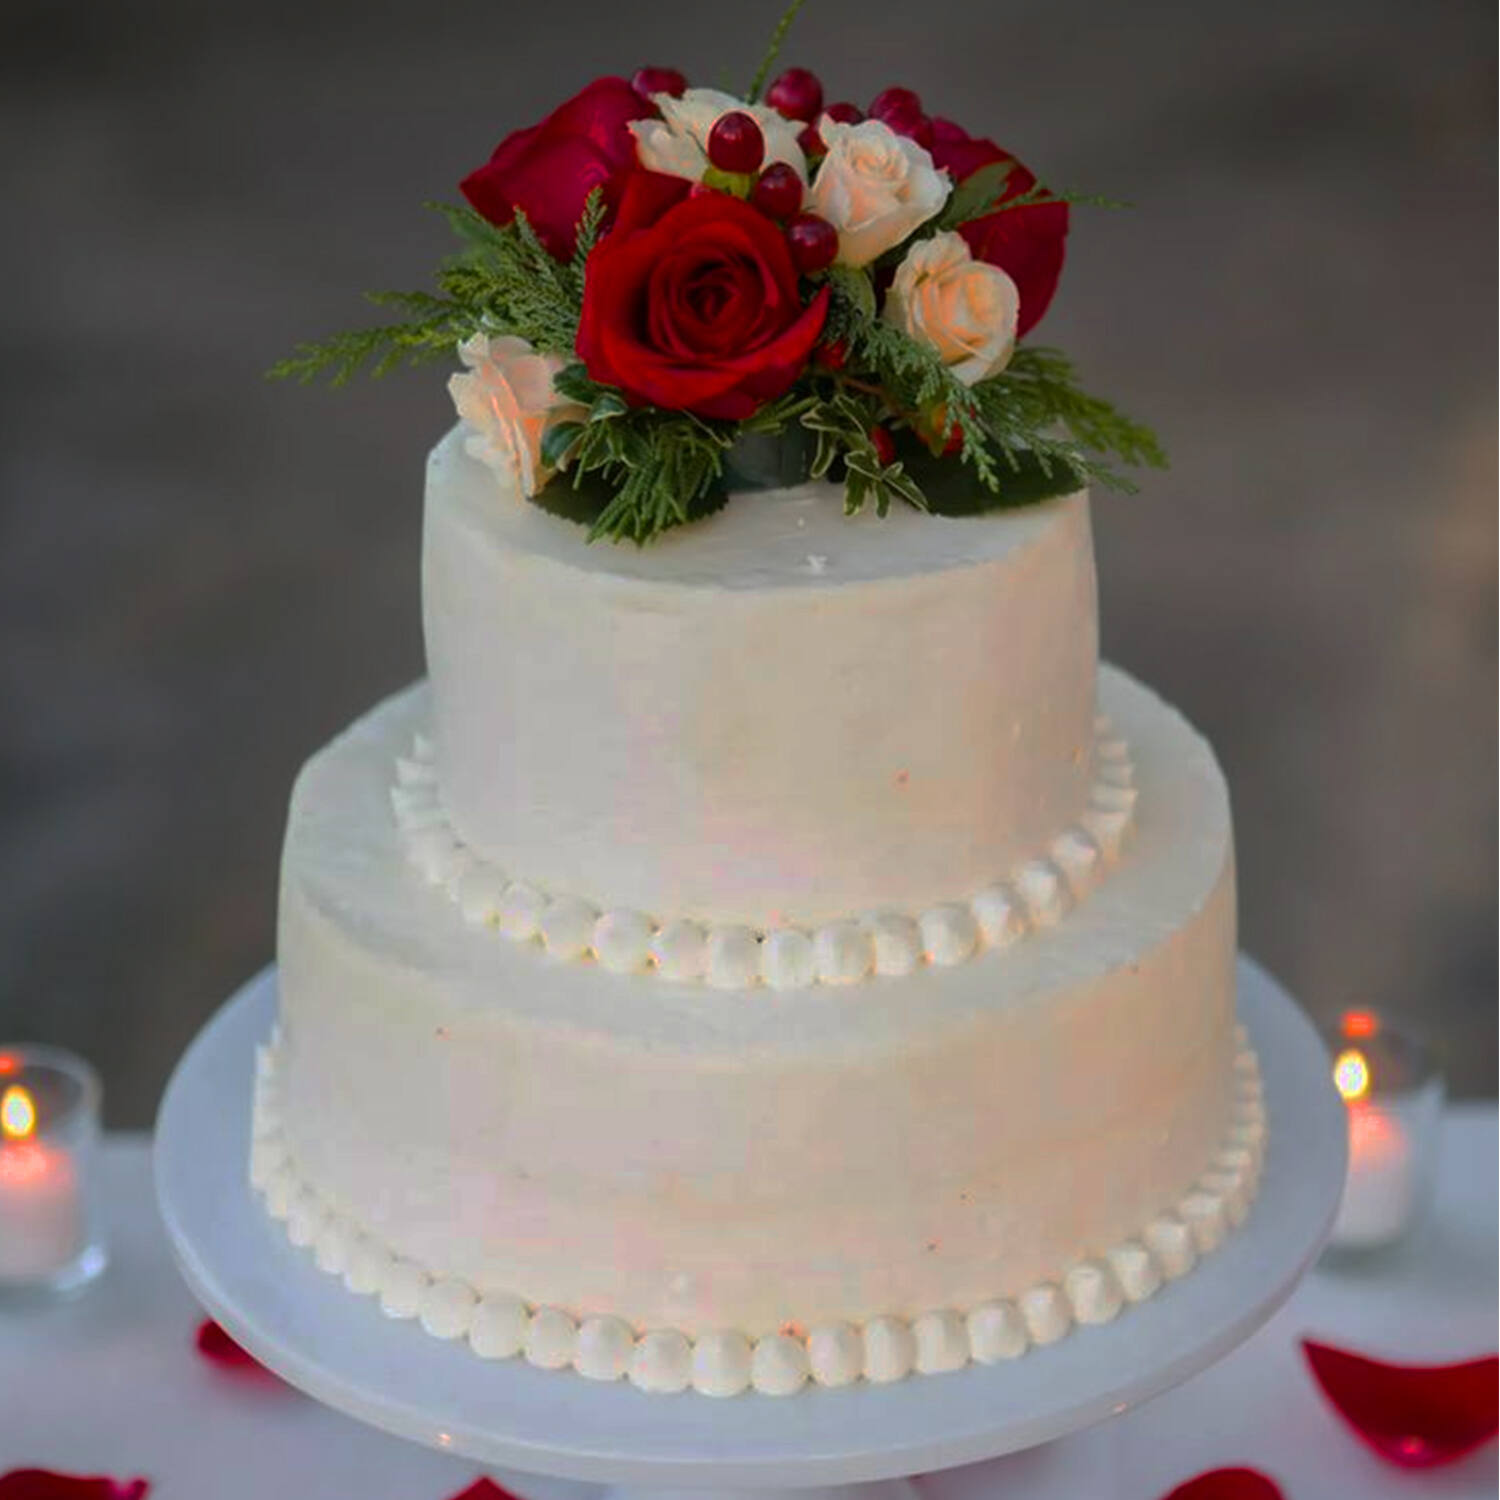 Bikaner Cake ✨❣️ Order For Customize Cake 🎂😍 Contact :- 9782439821  Bikaner ❣️ | Instagram